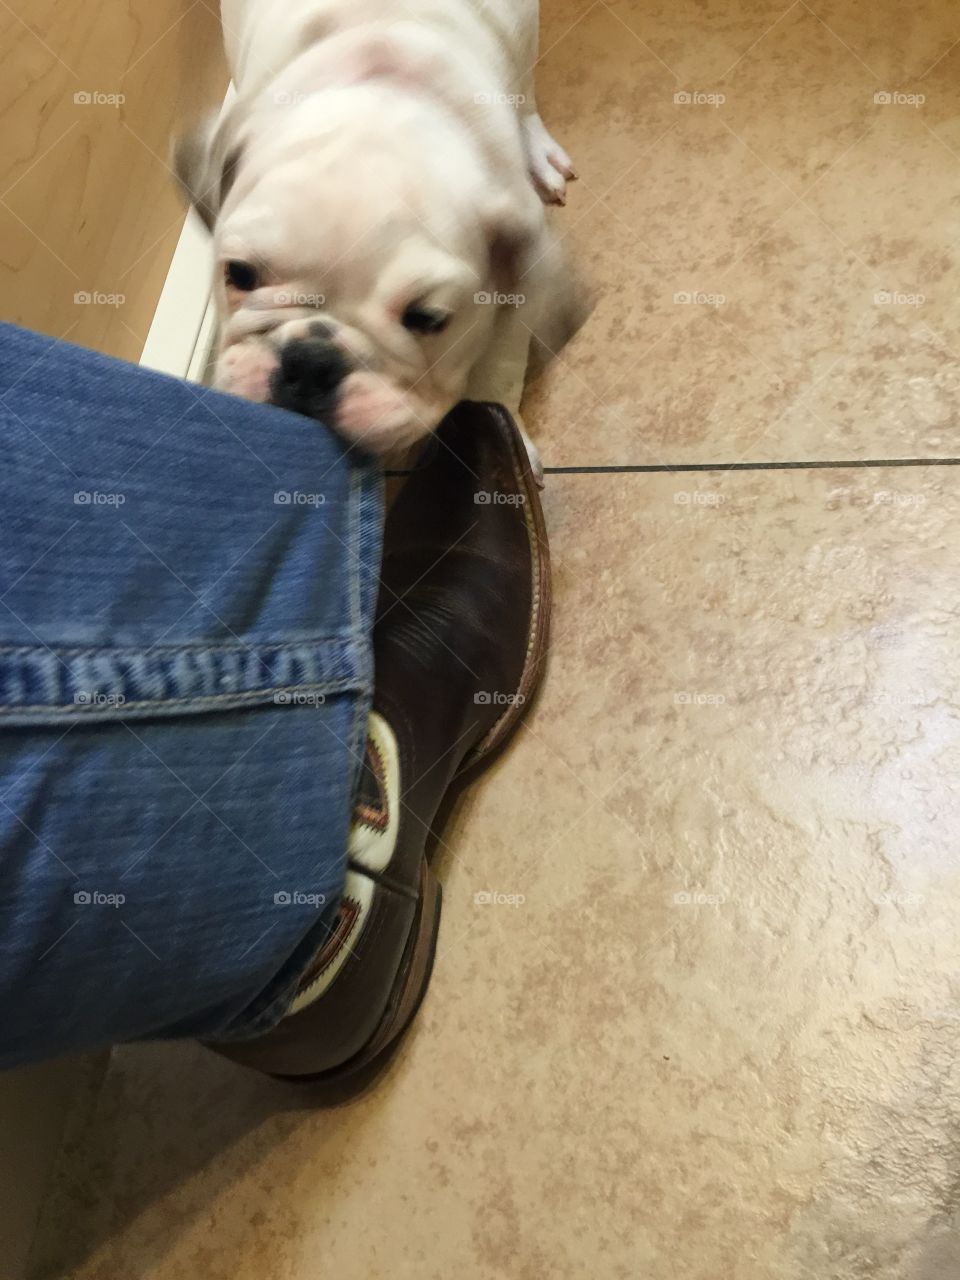 Bulldog pulling on jeans!
